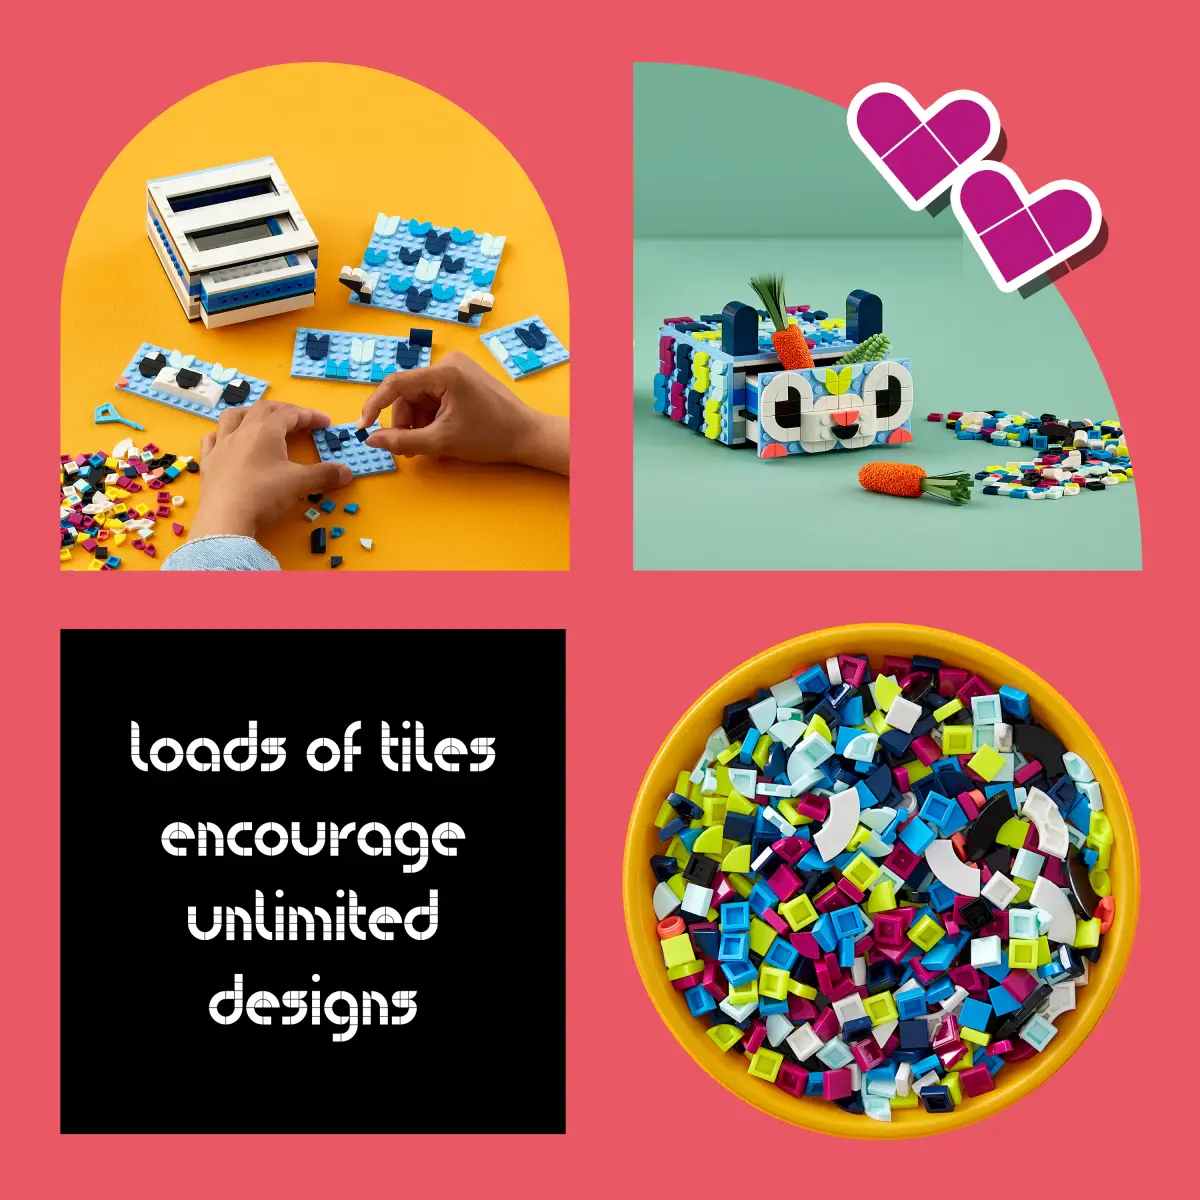 LEGO DOTS Creative Animal Drawer DIY Craft Kit, 643 Pieces, Multicolour, 6Y+